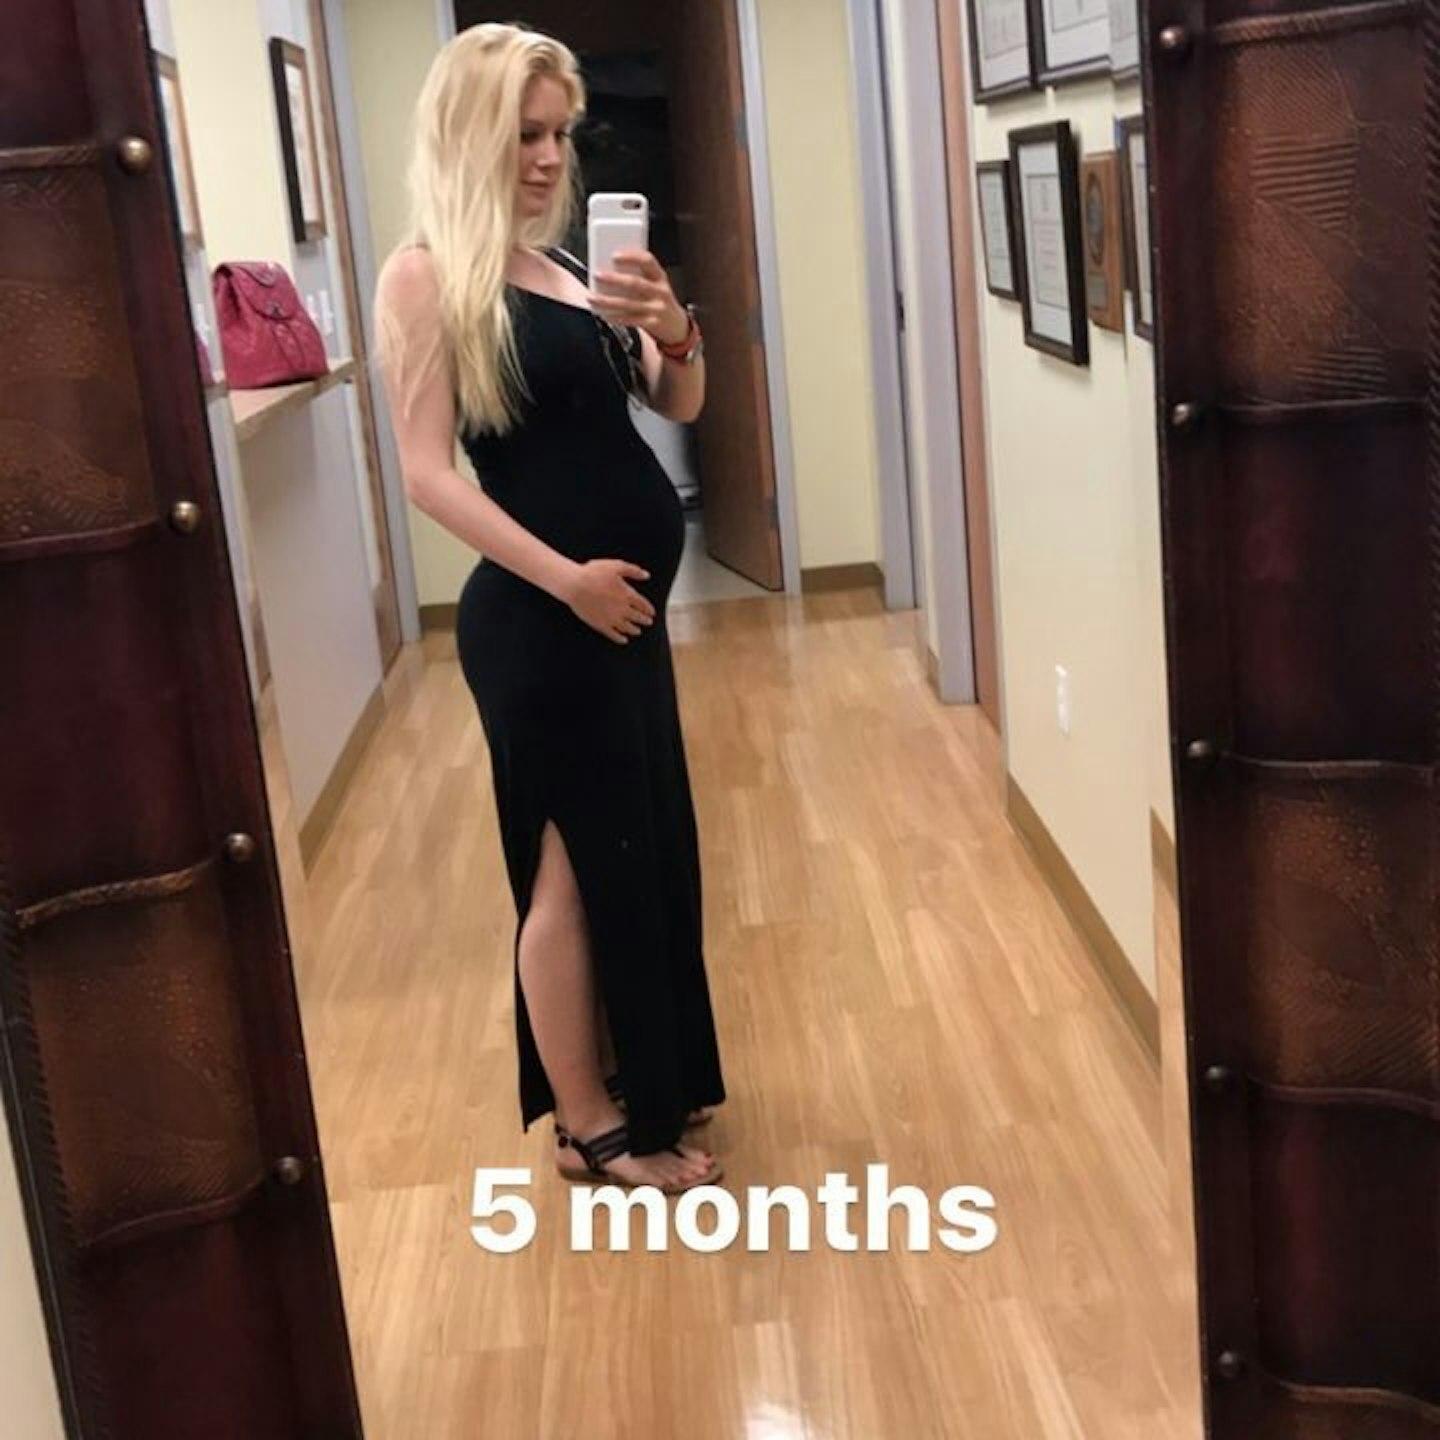 heidi-montag-pregnant-huge-bump-six-months